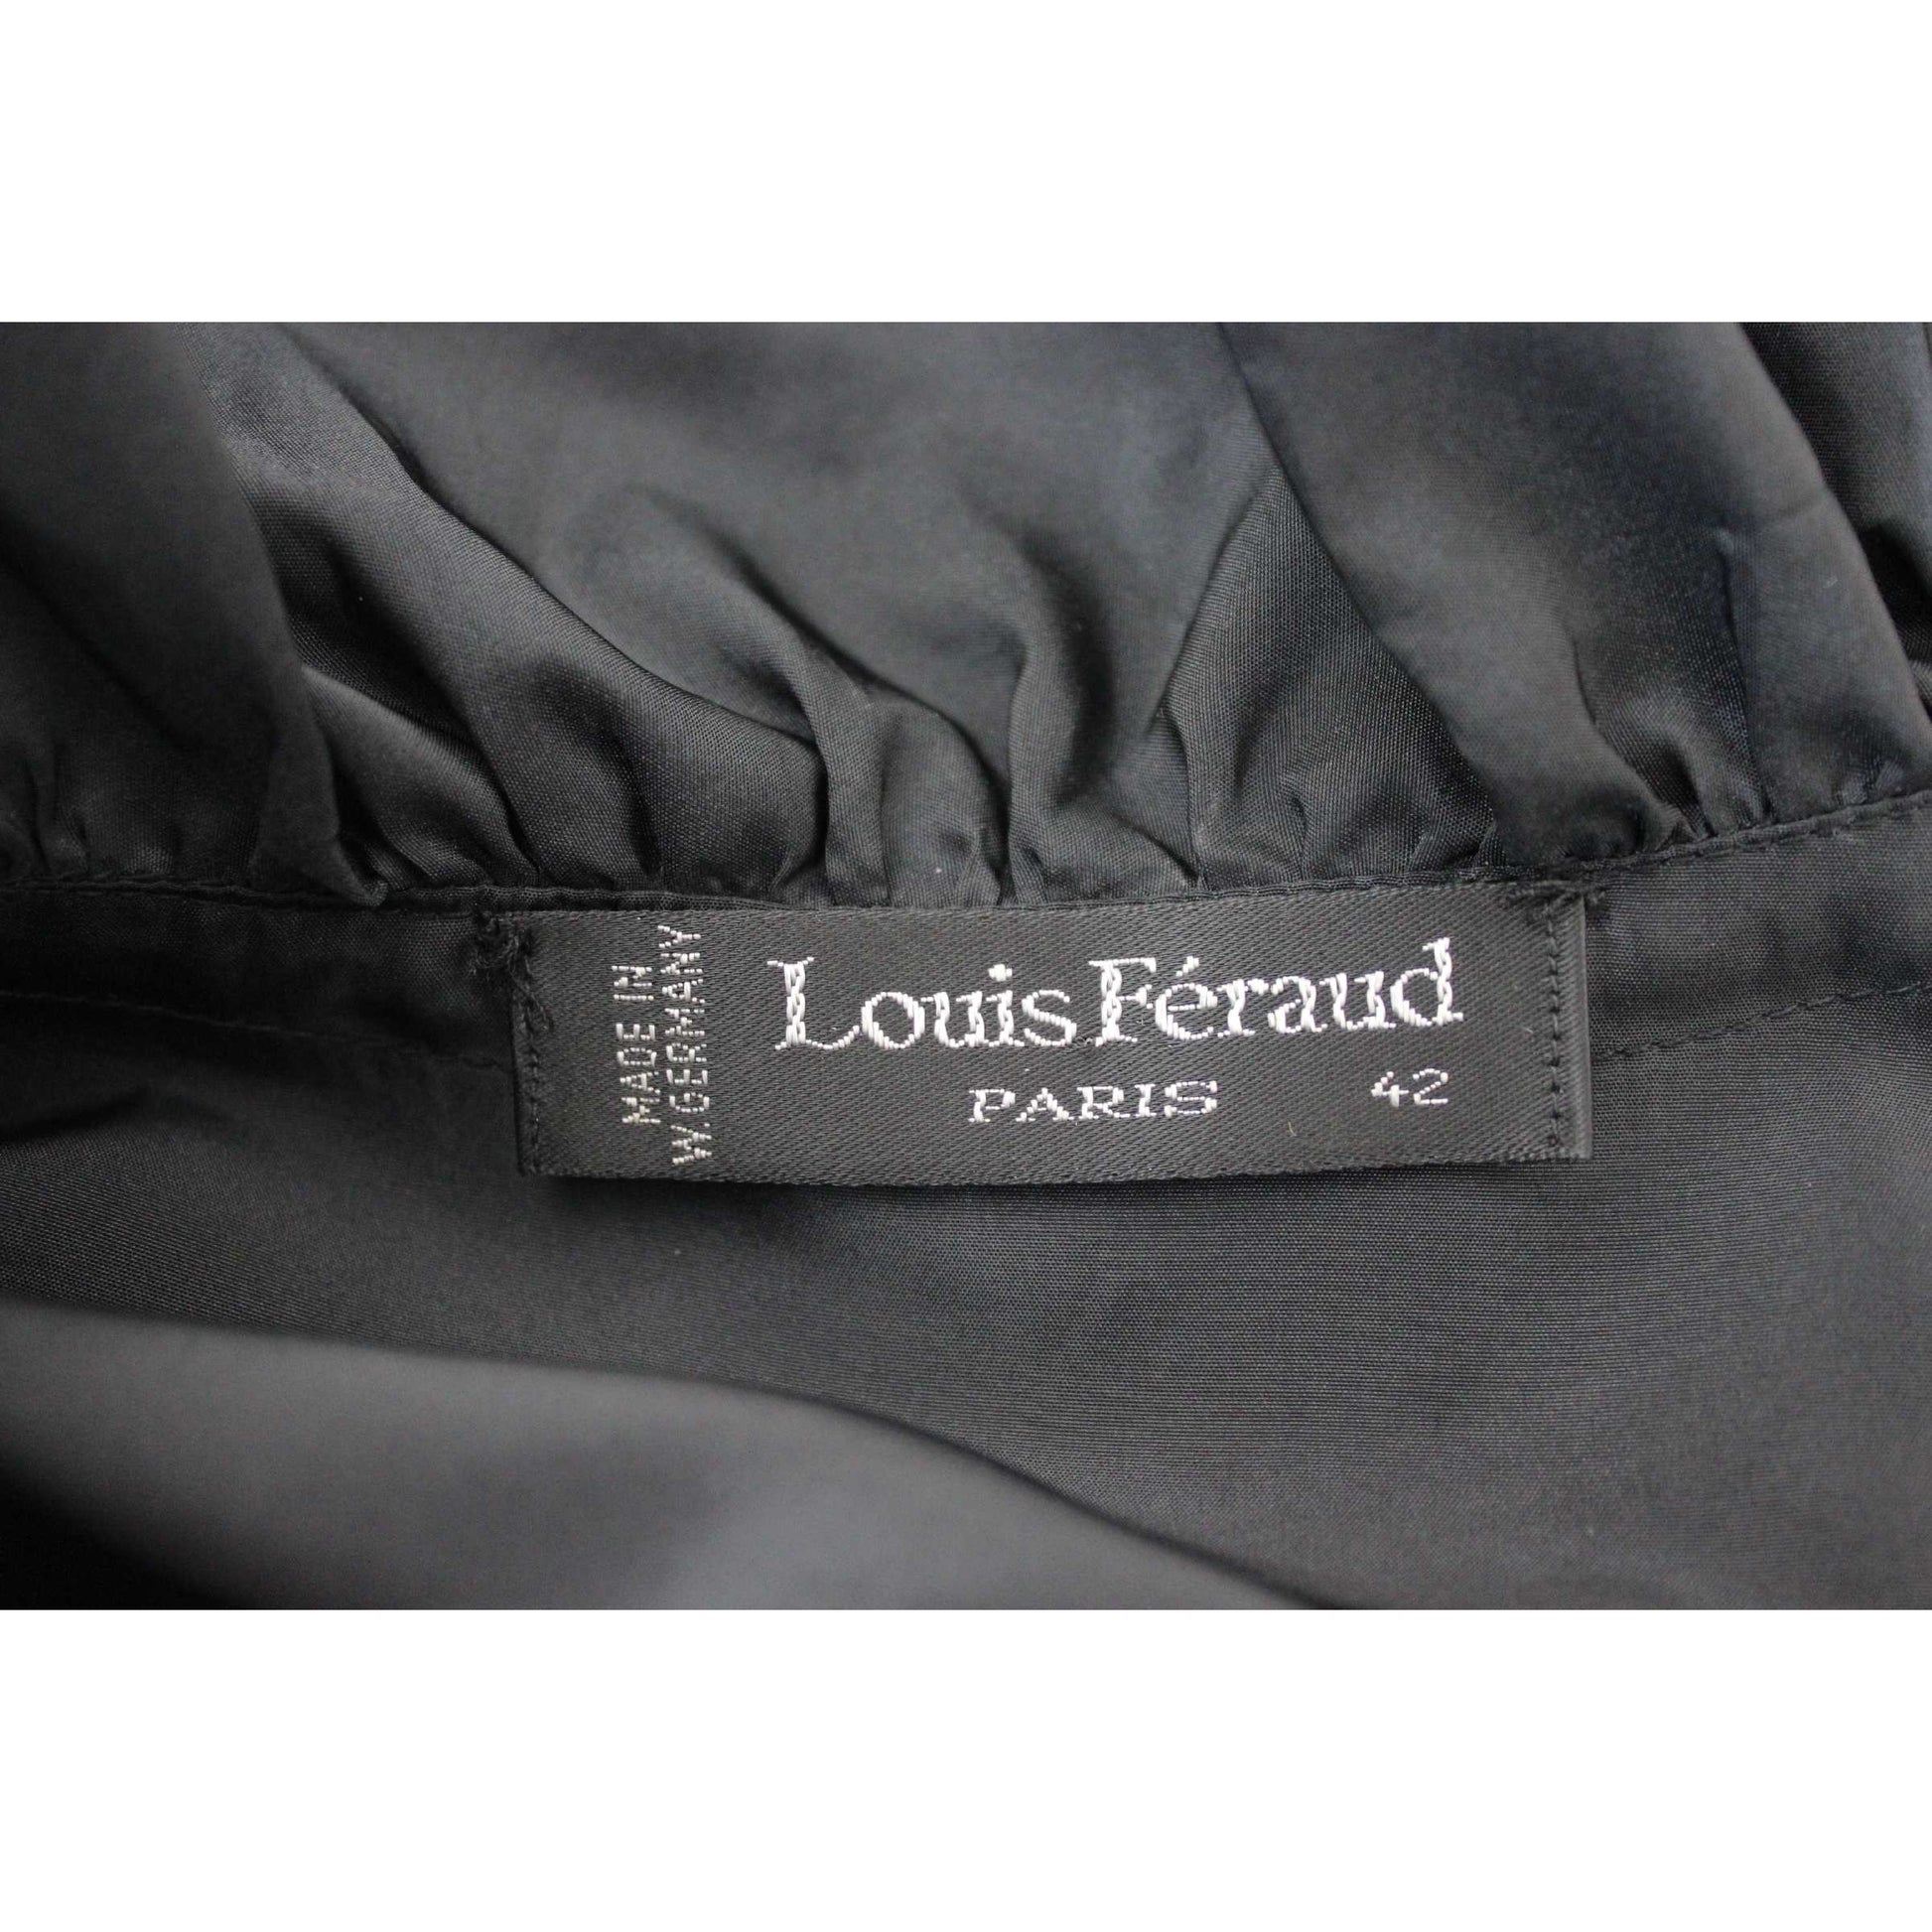 Vintage & second hand Louis Feraud bags